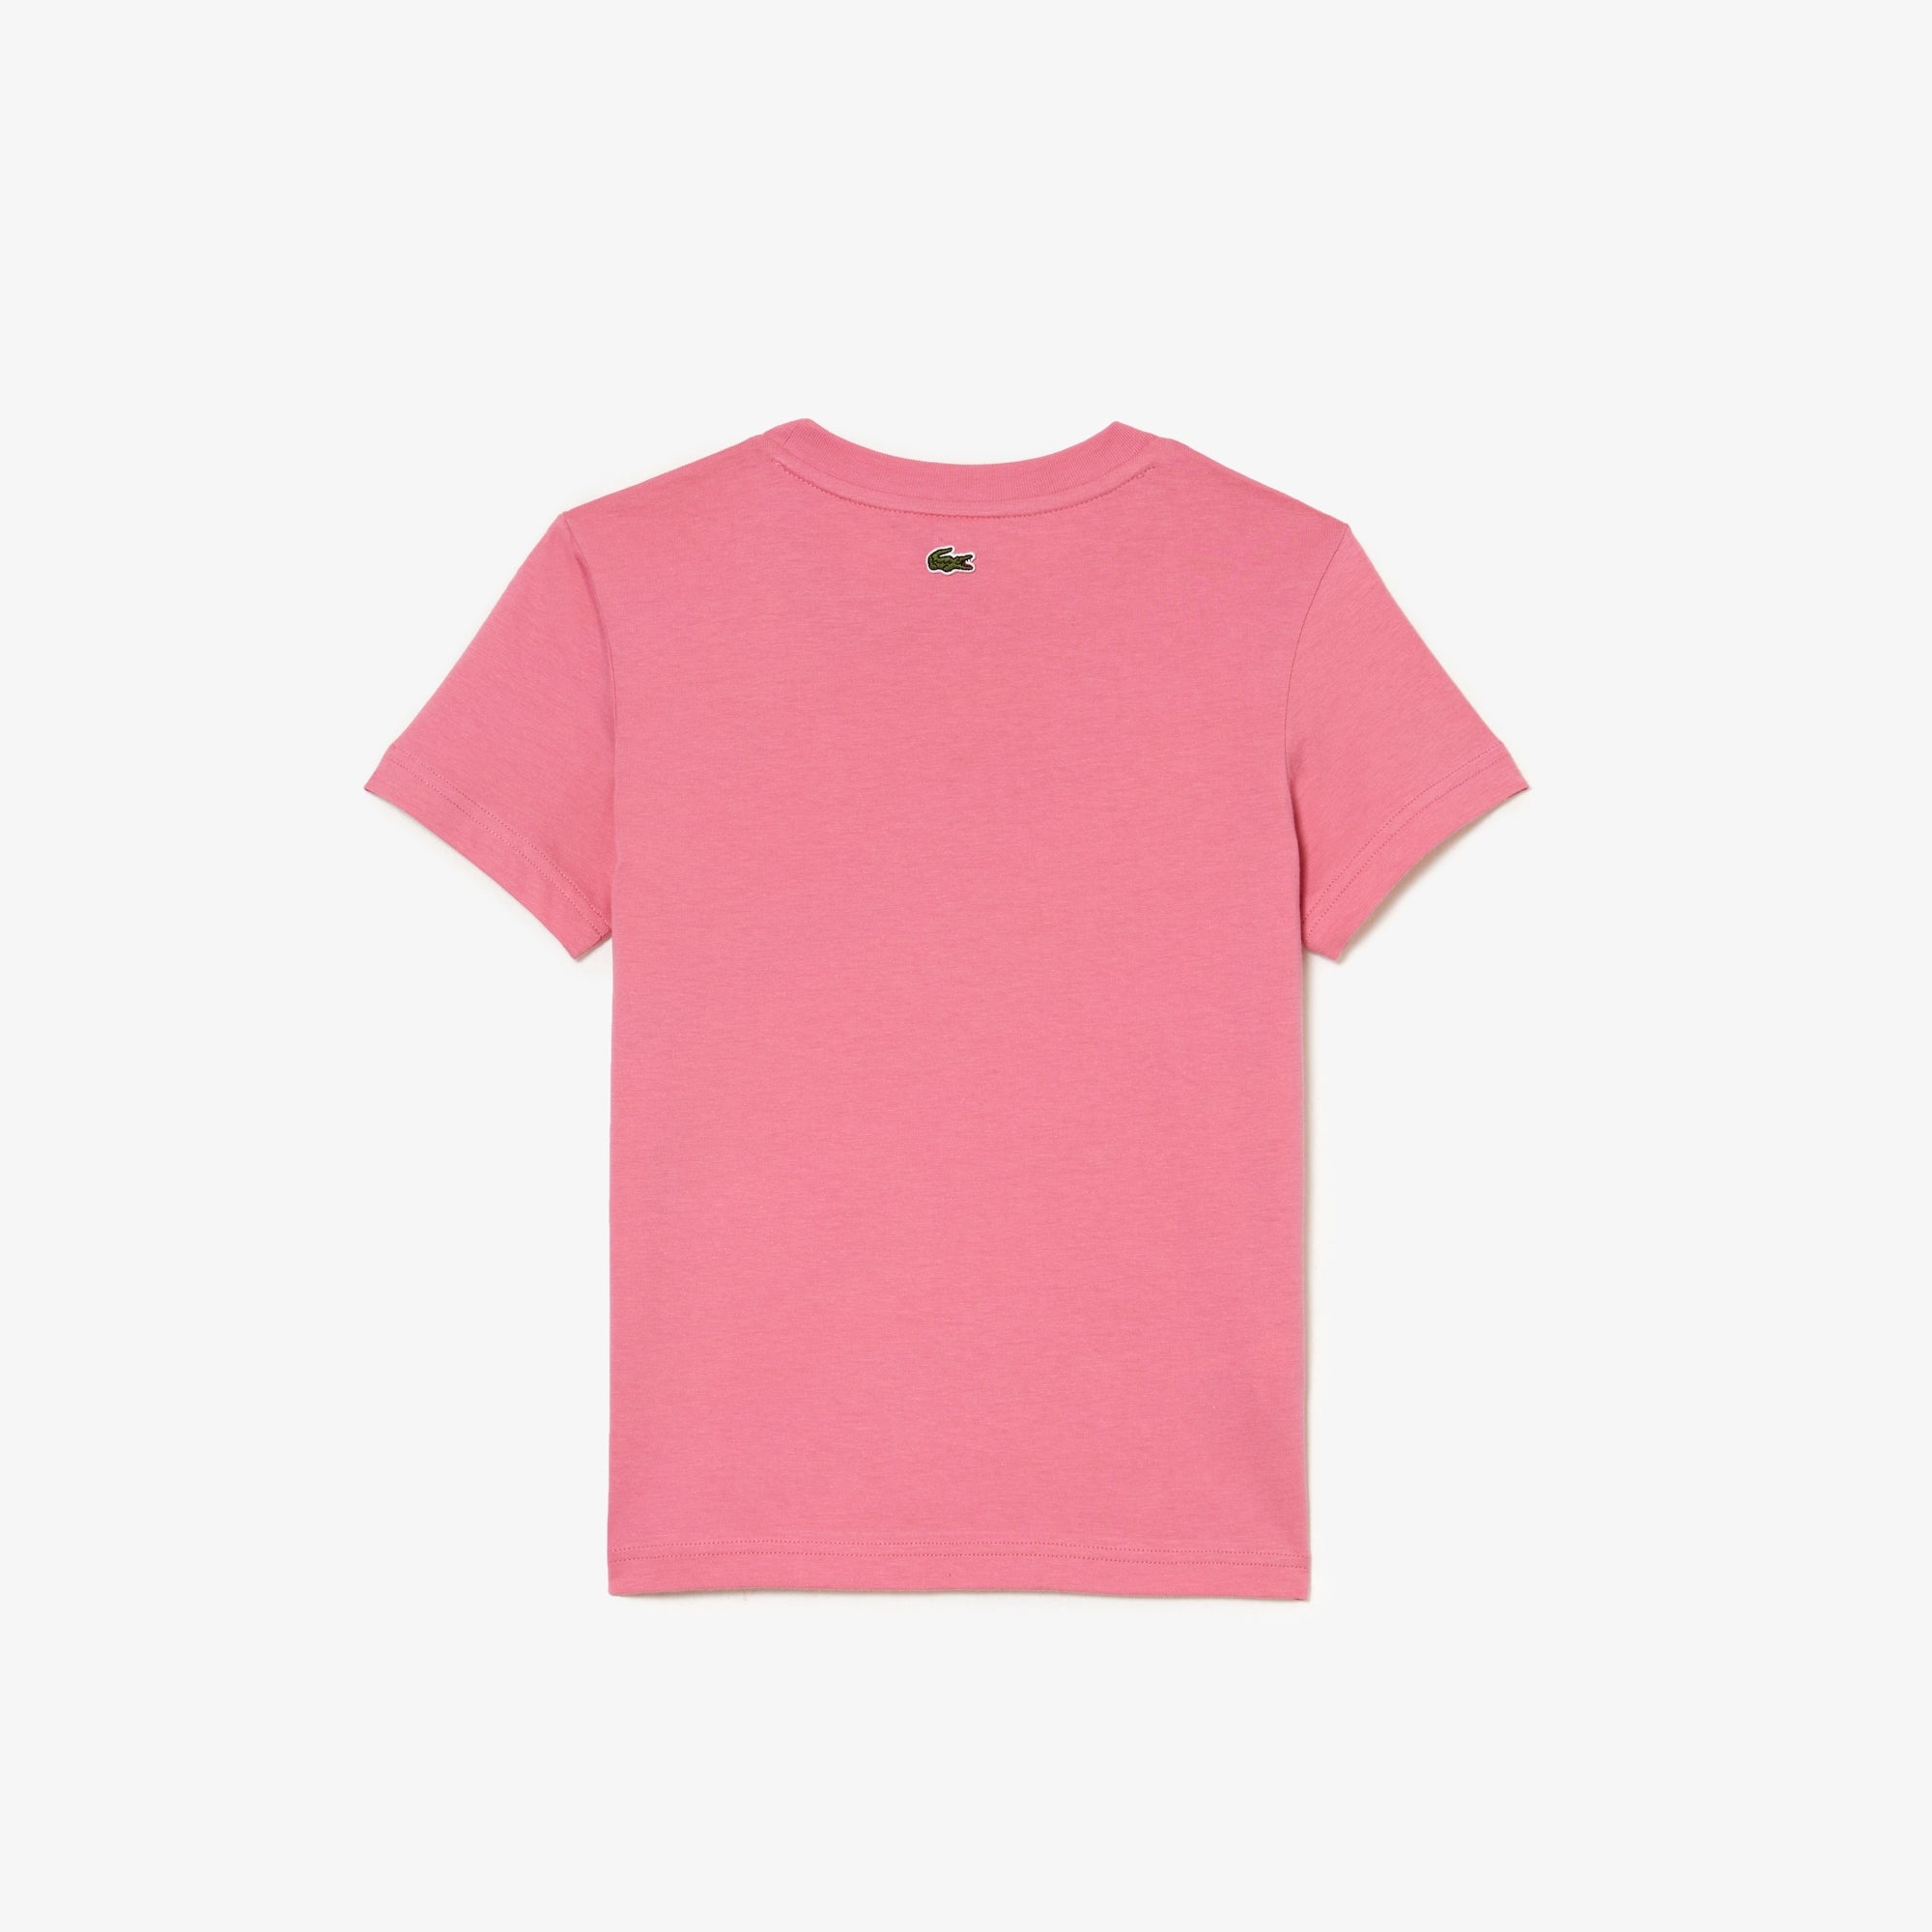 Lacoste Kids Contrast Branded Cotton Jersey T-Shirt Pink TJ9732 2R3